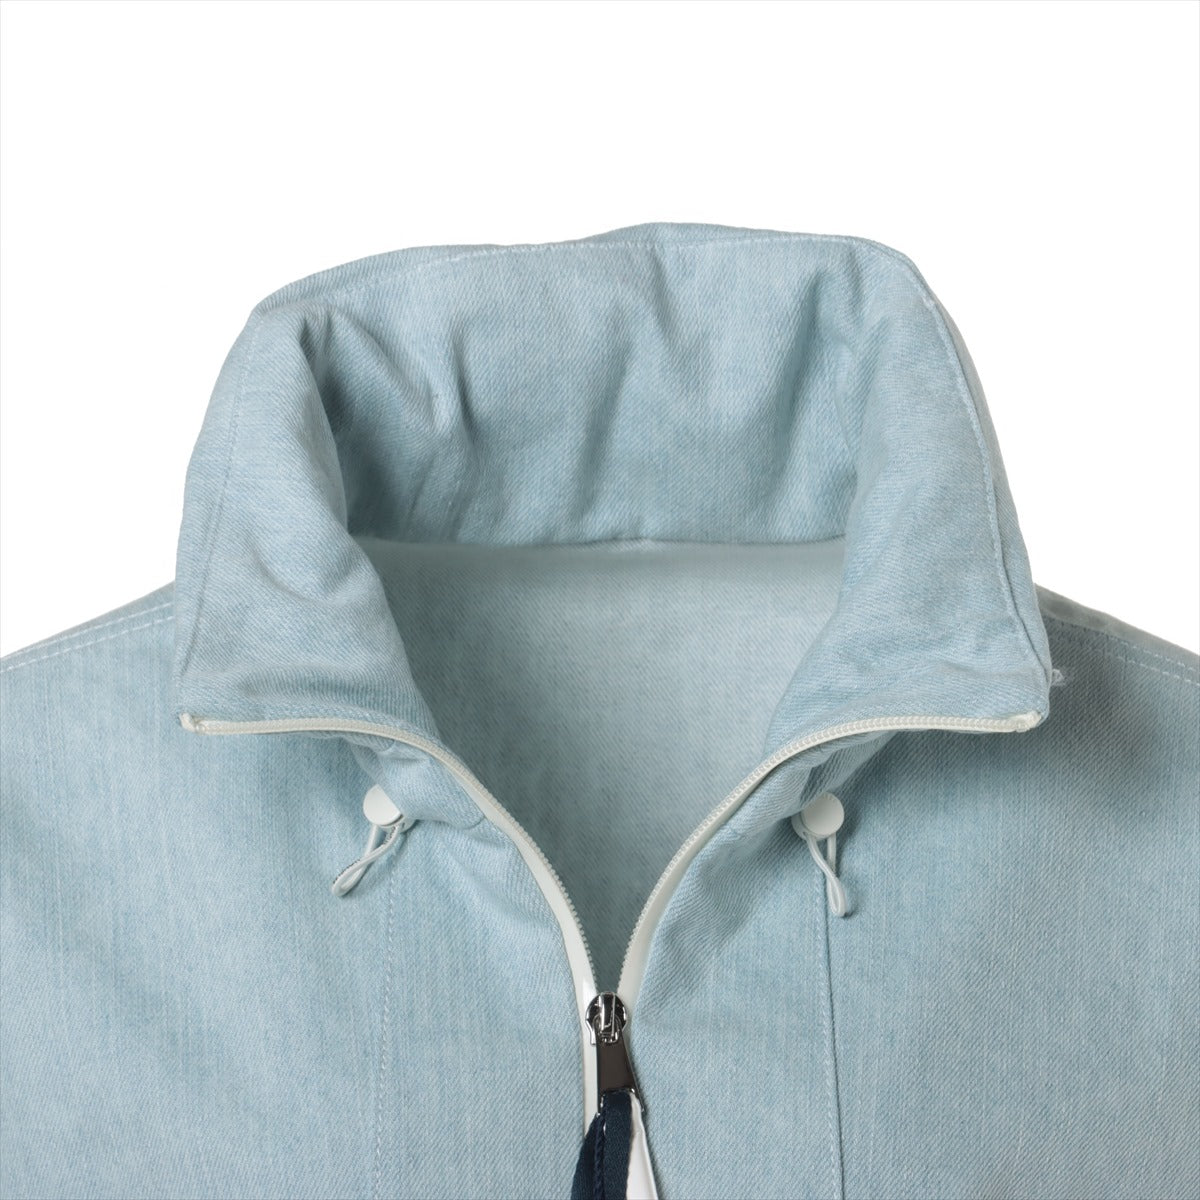 Moncler 22 years Cotton & nylon Blouson 0 Ladies' Light blue  SEVERAU Can store hood Has spare buttons